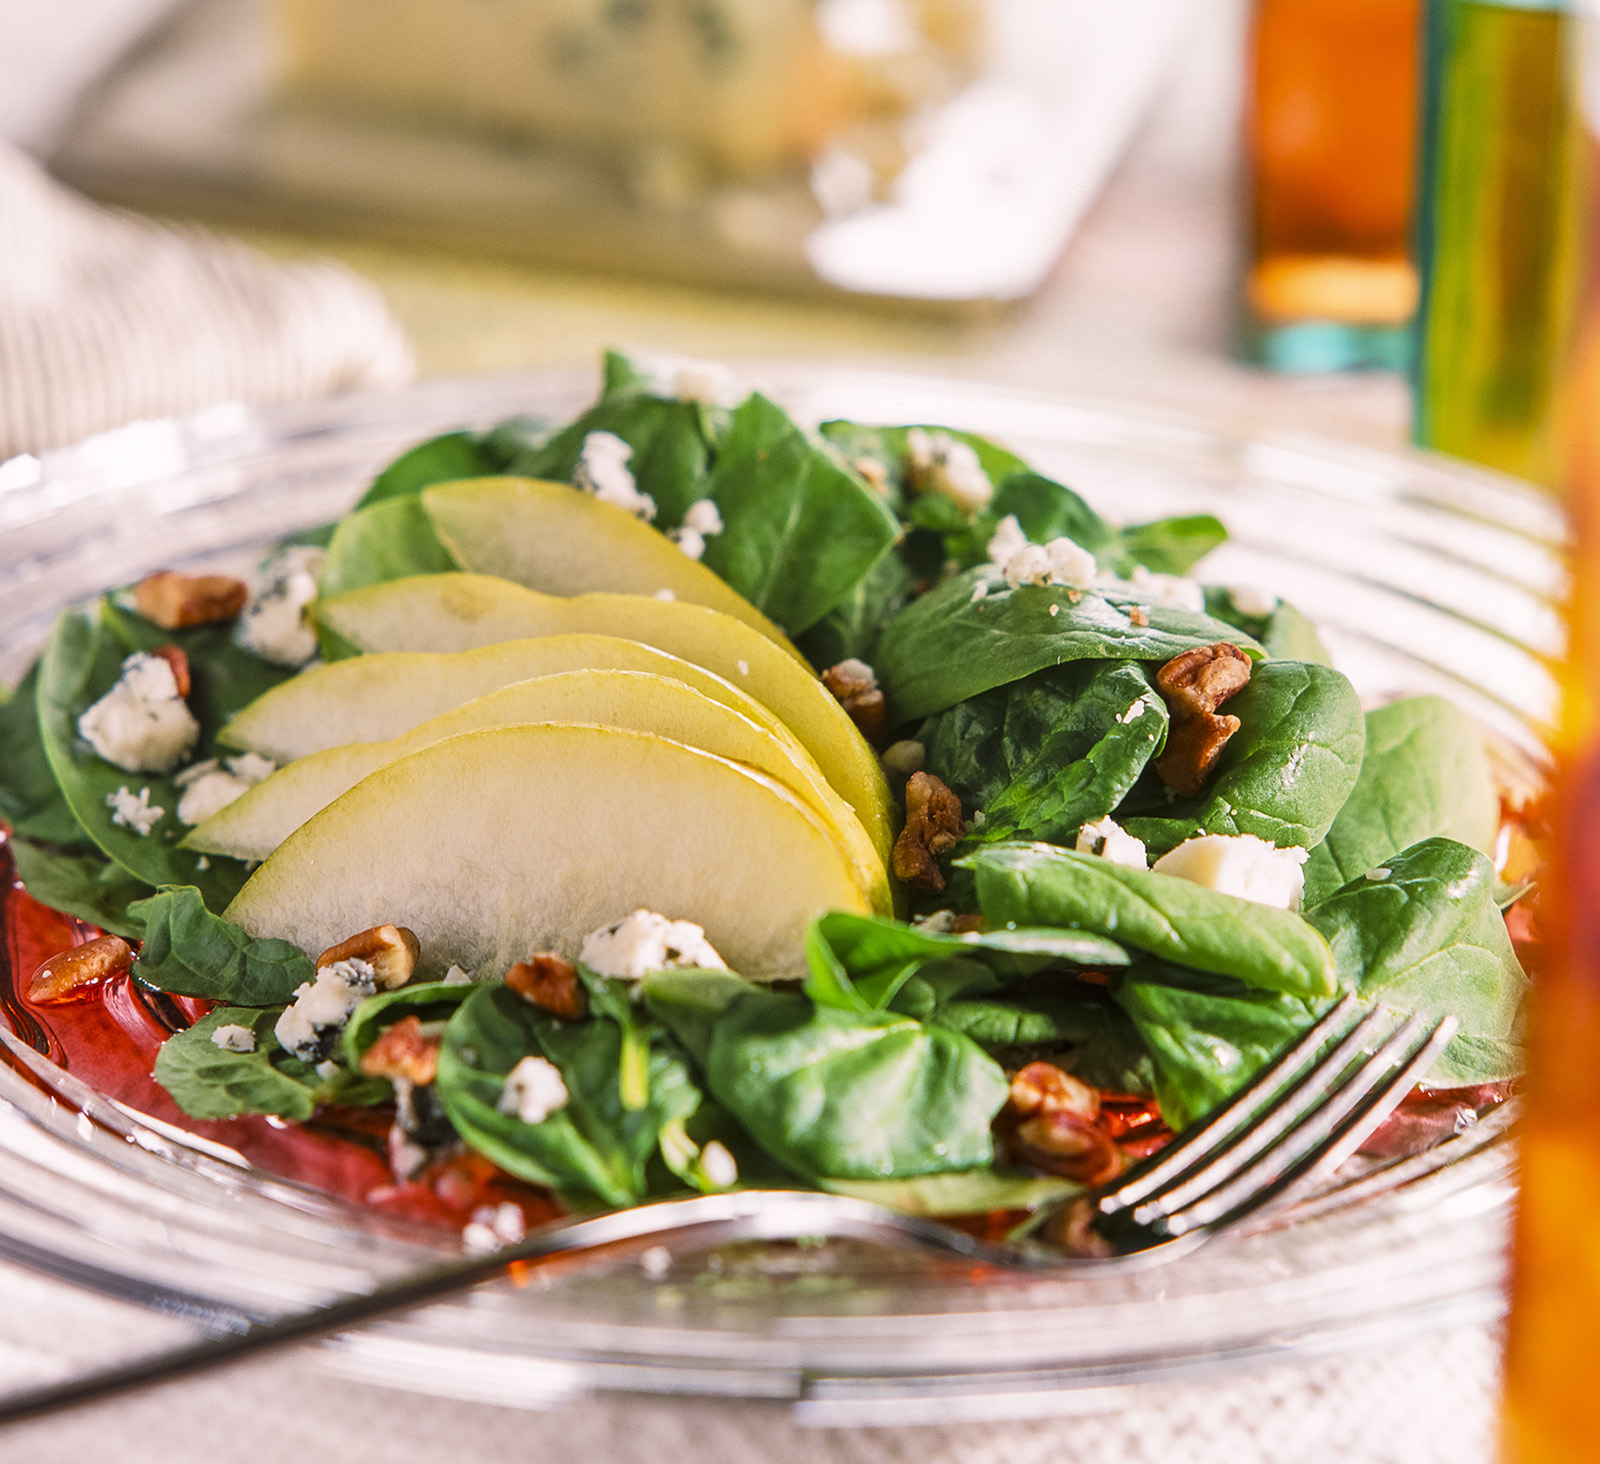 jeff-green-spinach-salad